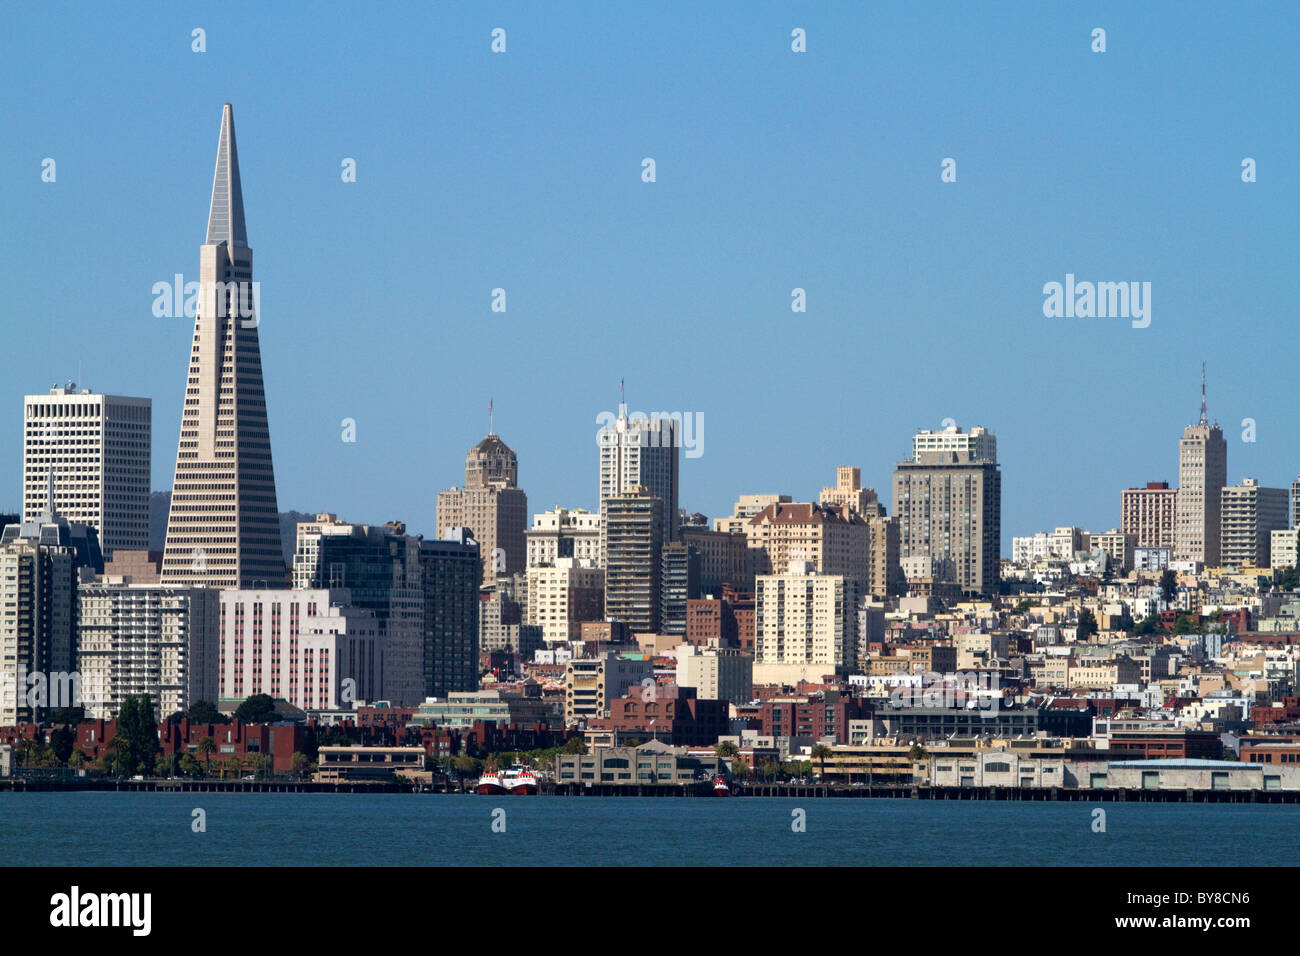 View of the city of San Francisco from Treasure Island, California, USA. Stock Photo